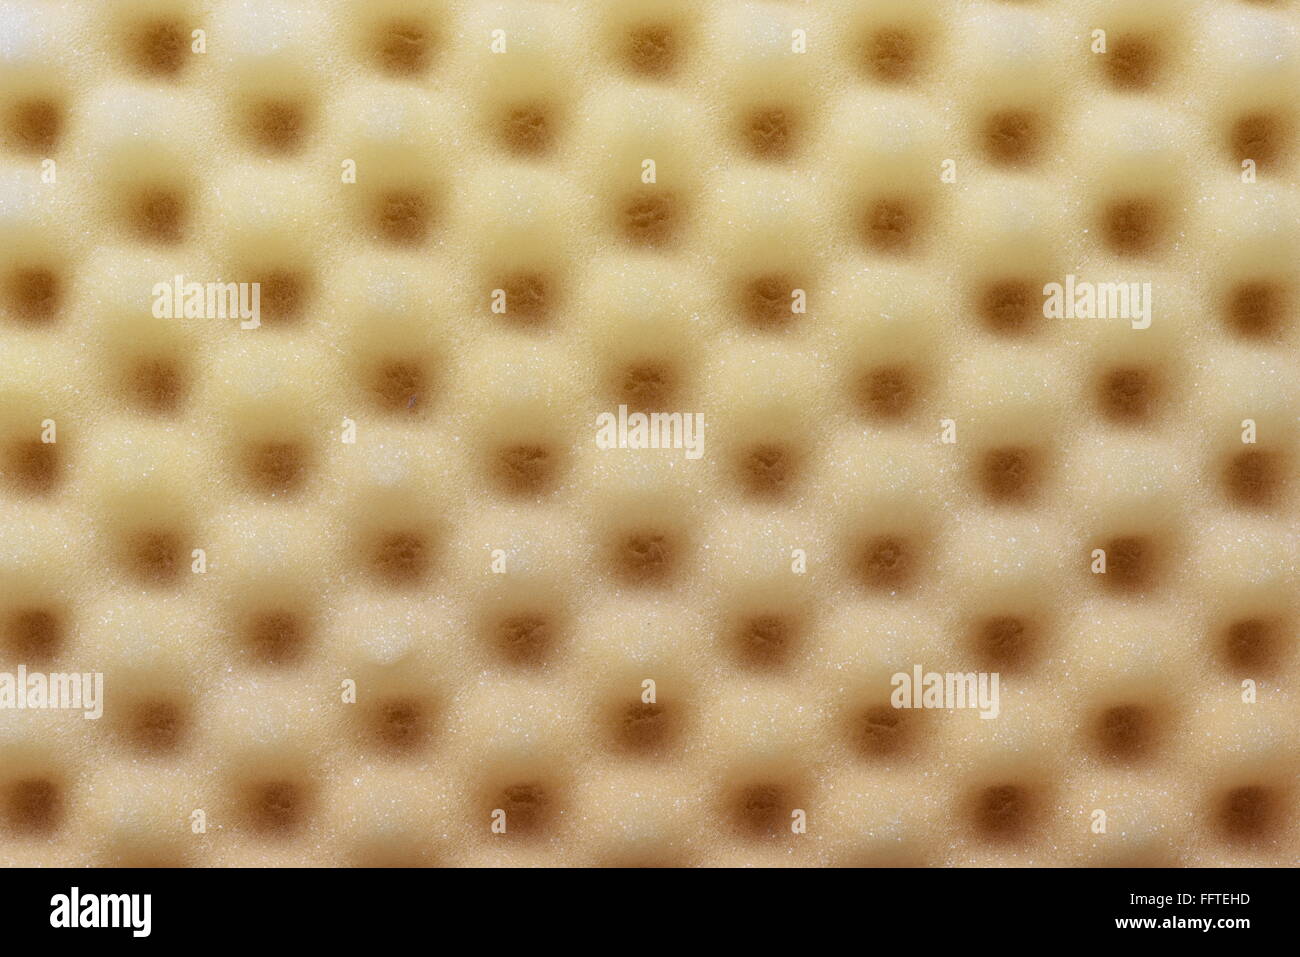 Foam acoustic sponge surface background Stock Photo